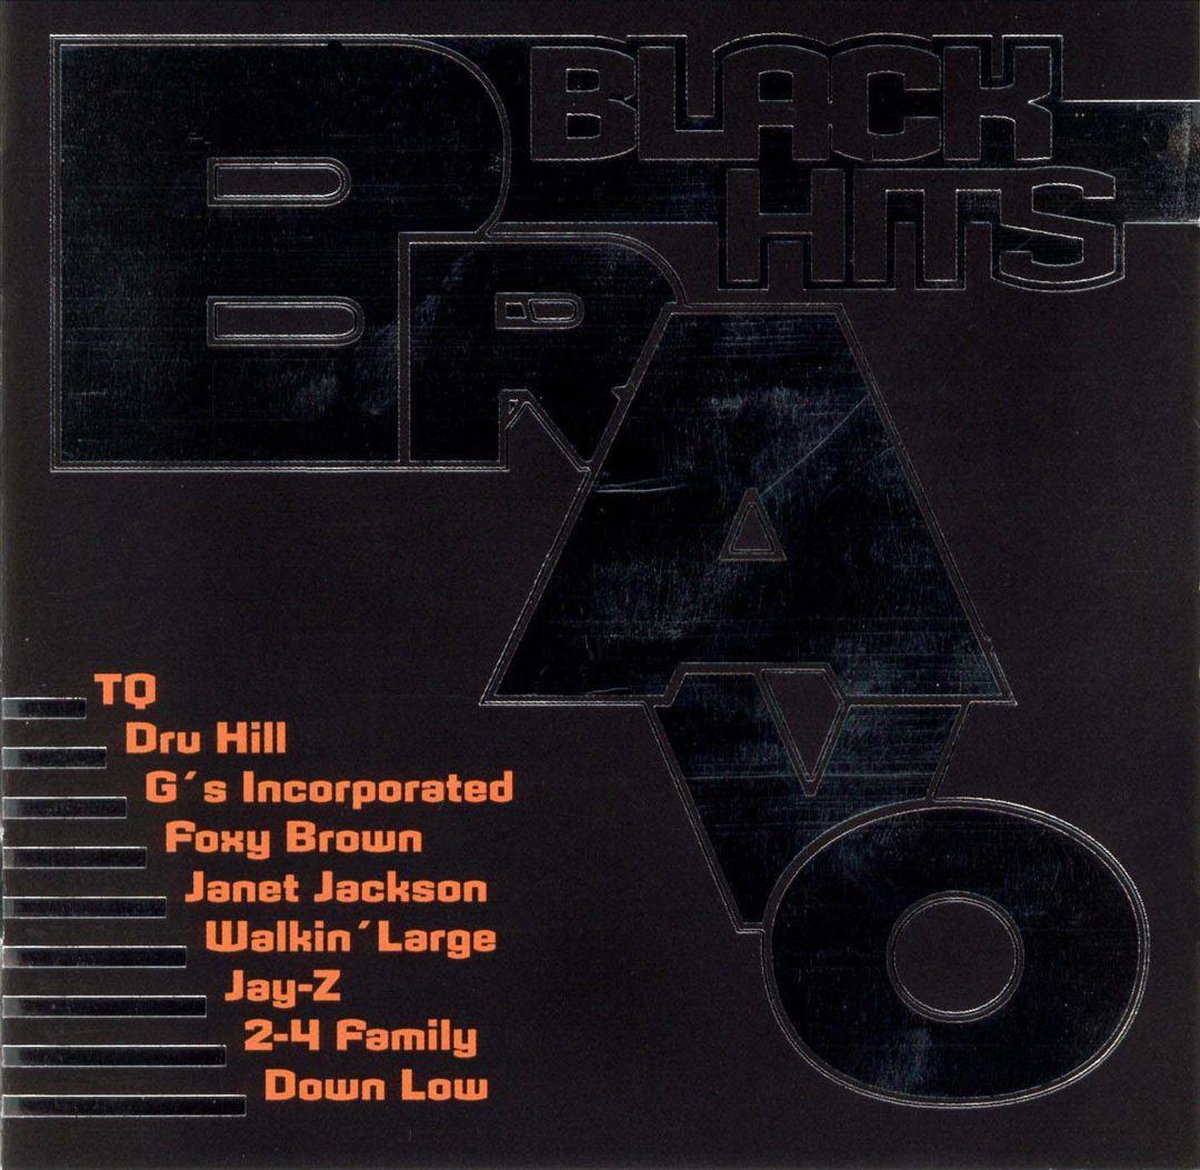 Bravo Black Hits - various artists